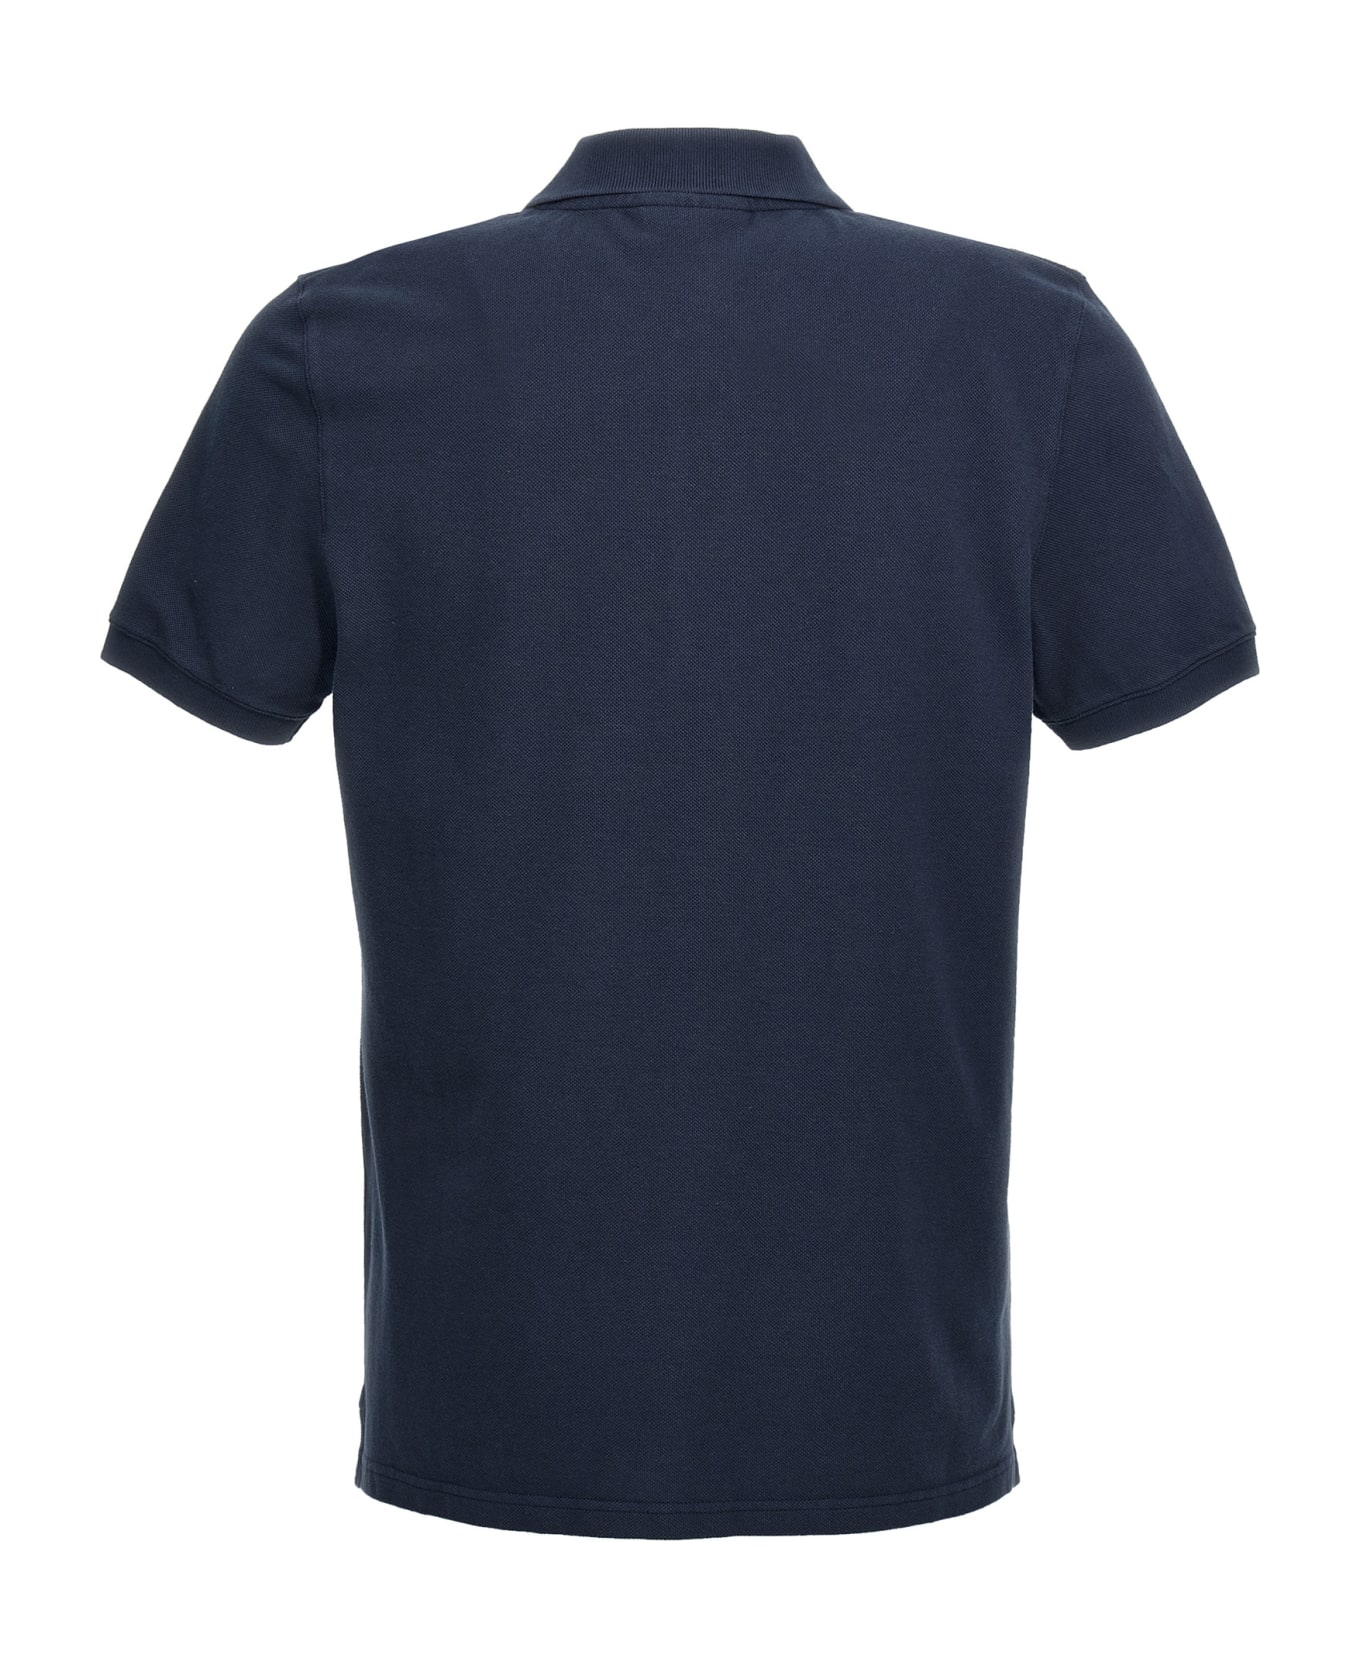 Maison Kitsuné 'fox Head' Polo Shirt - Ink blue